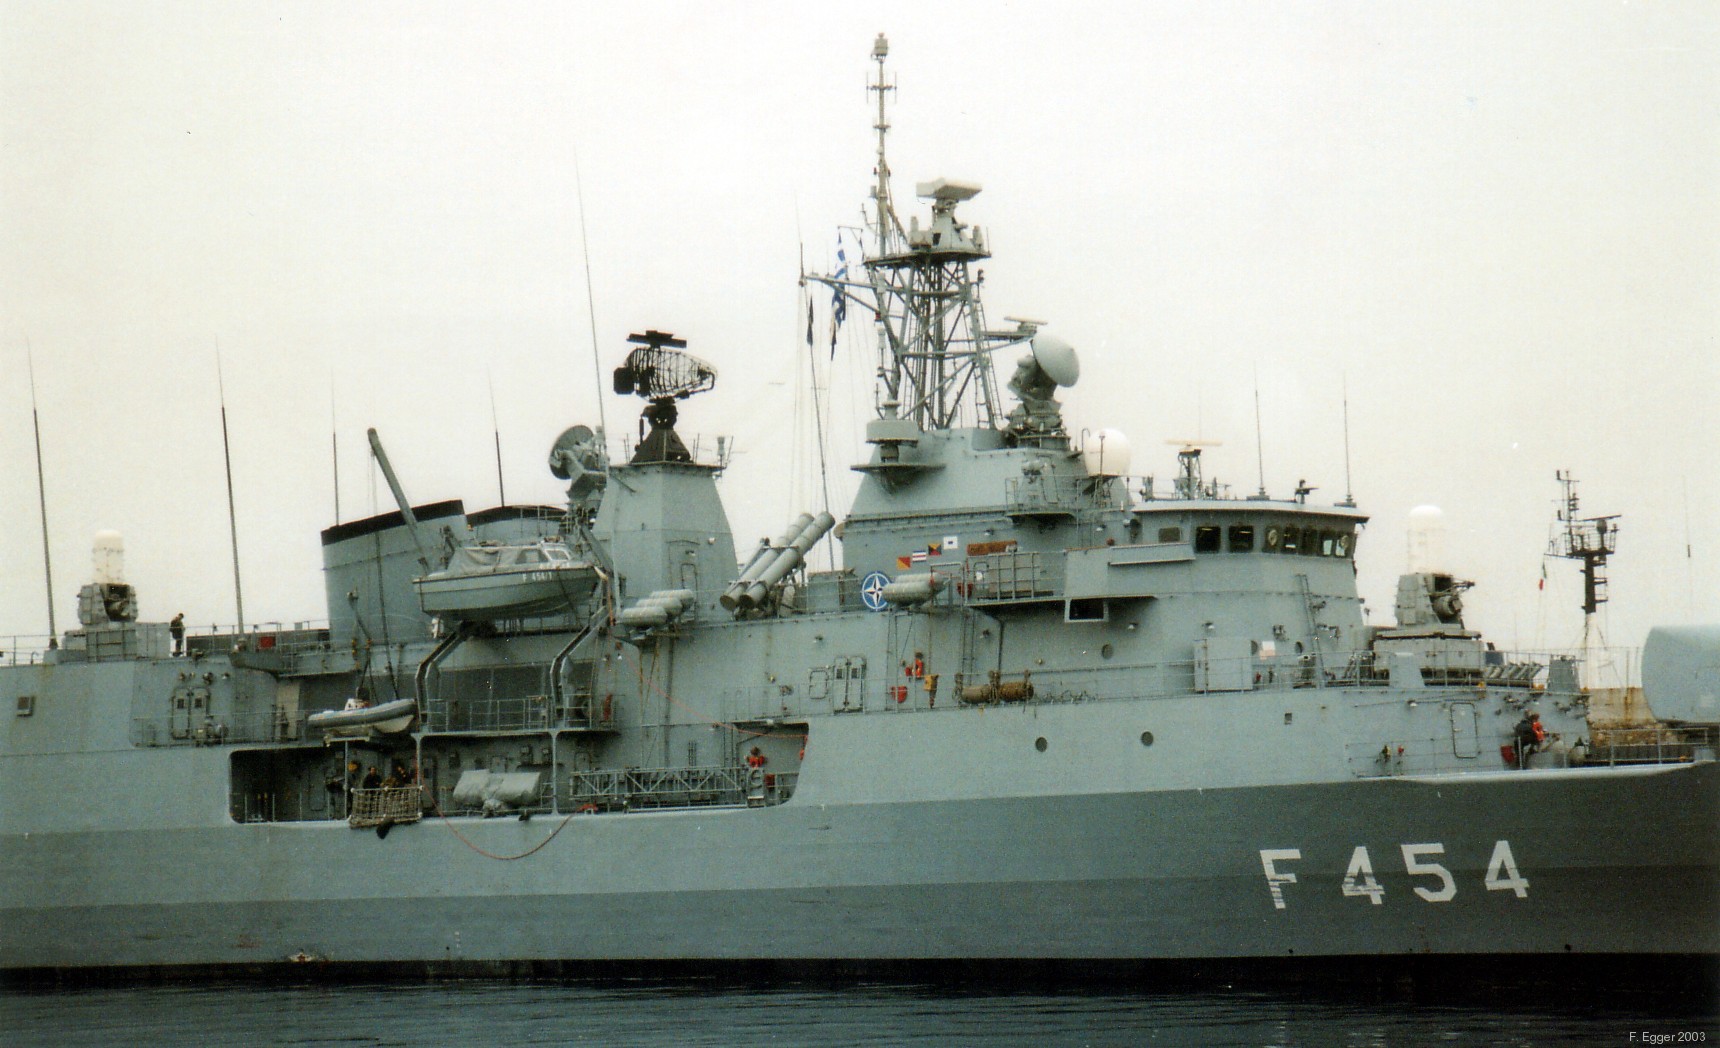 f 454 hs psara hydra class frigate meko-200hn hellenic navy greece nato standing naval force mediterranean stanavformed trieste italy 2003 08